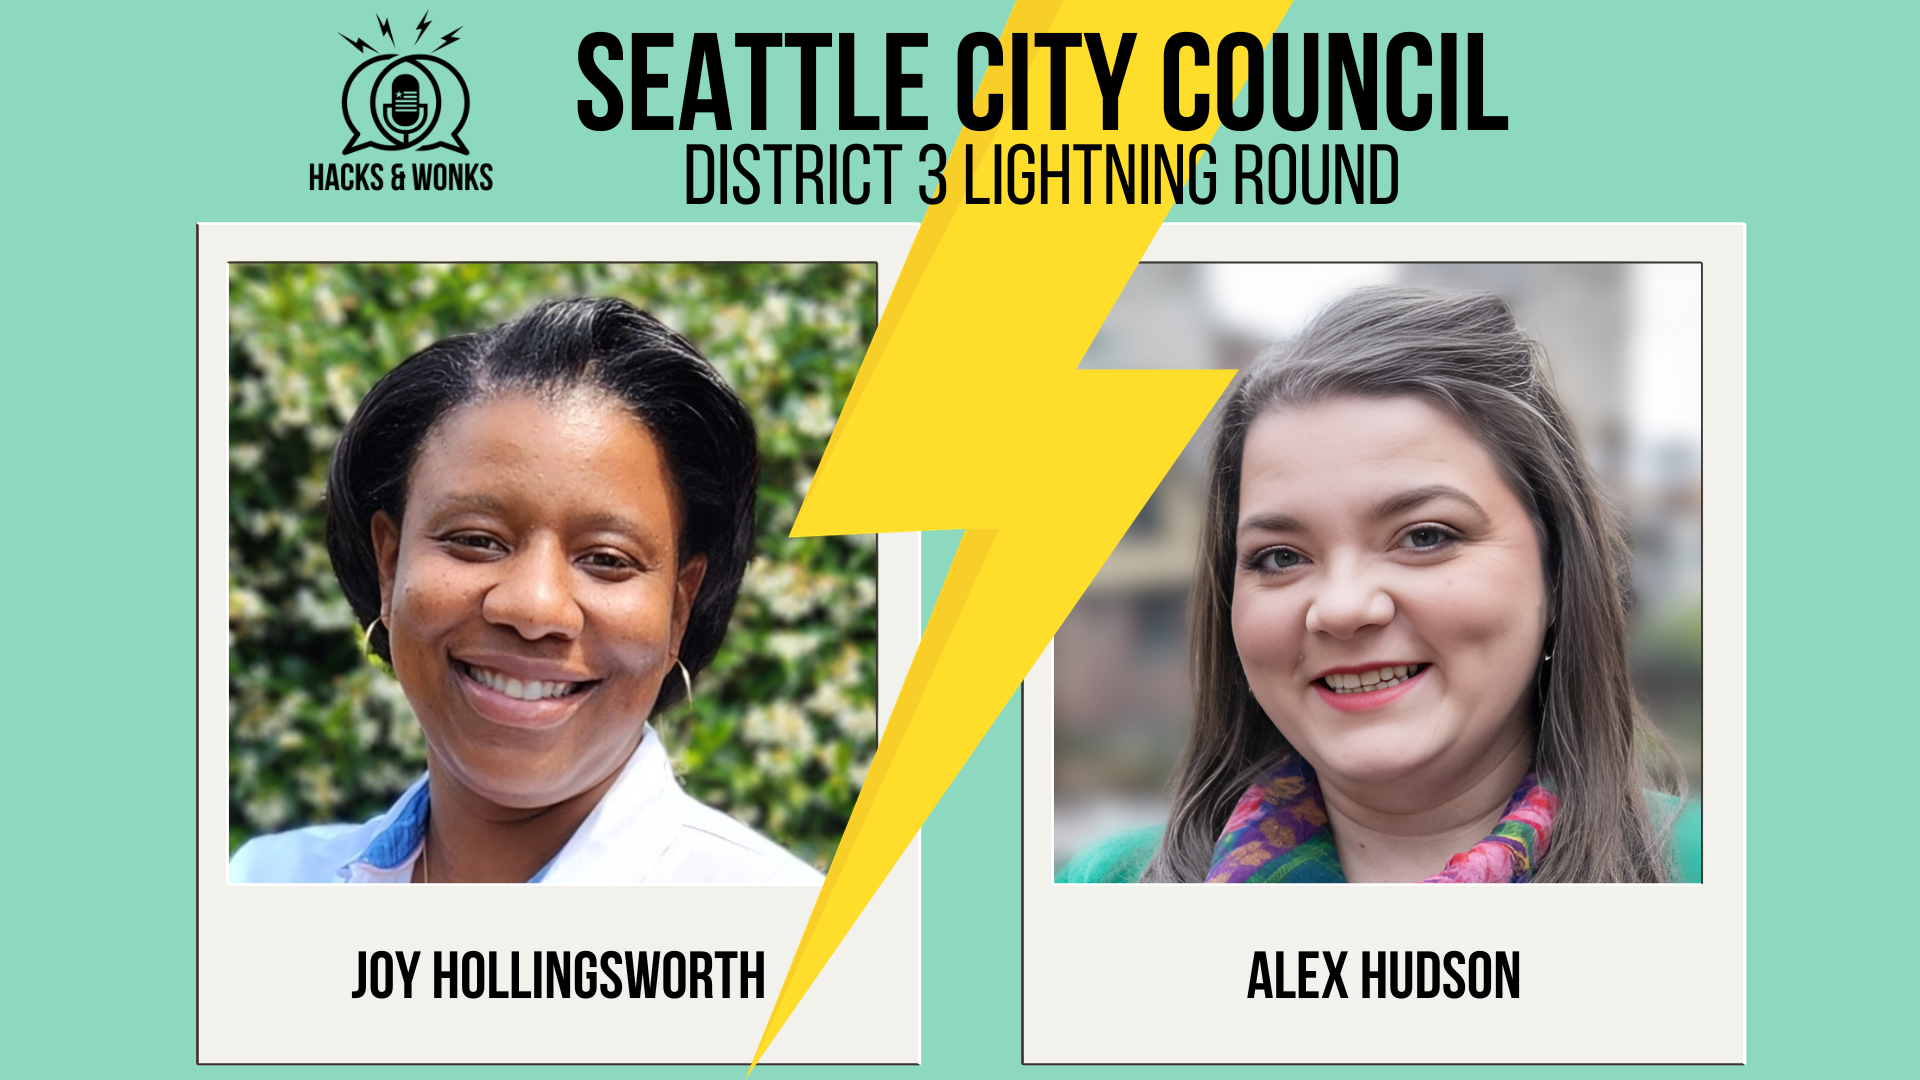 Hacks & Wonks Seattle City Council District 3 Lightning Round  Lightning bolt divides photos of the District 3 candidates: Joy Hollingsworth and Alex Hudson